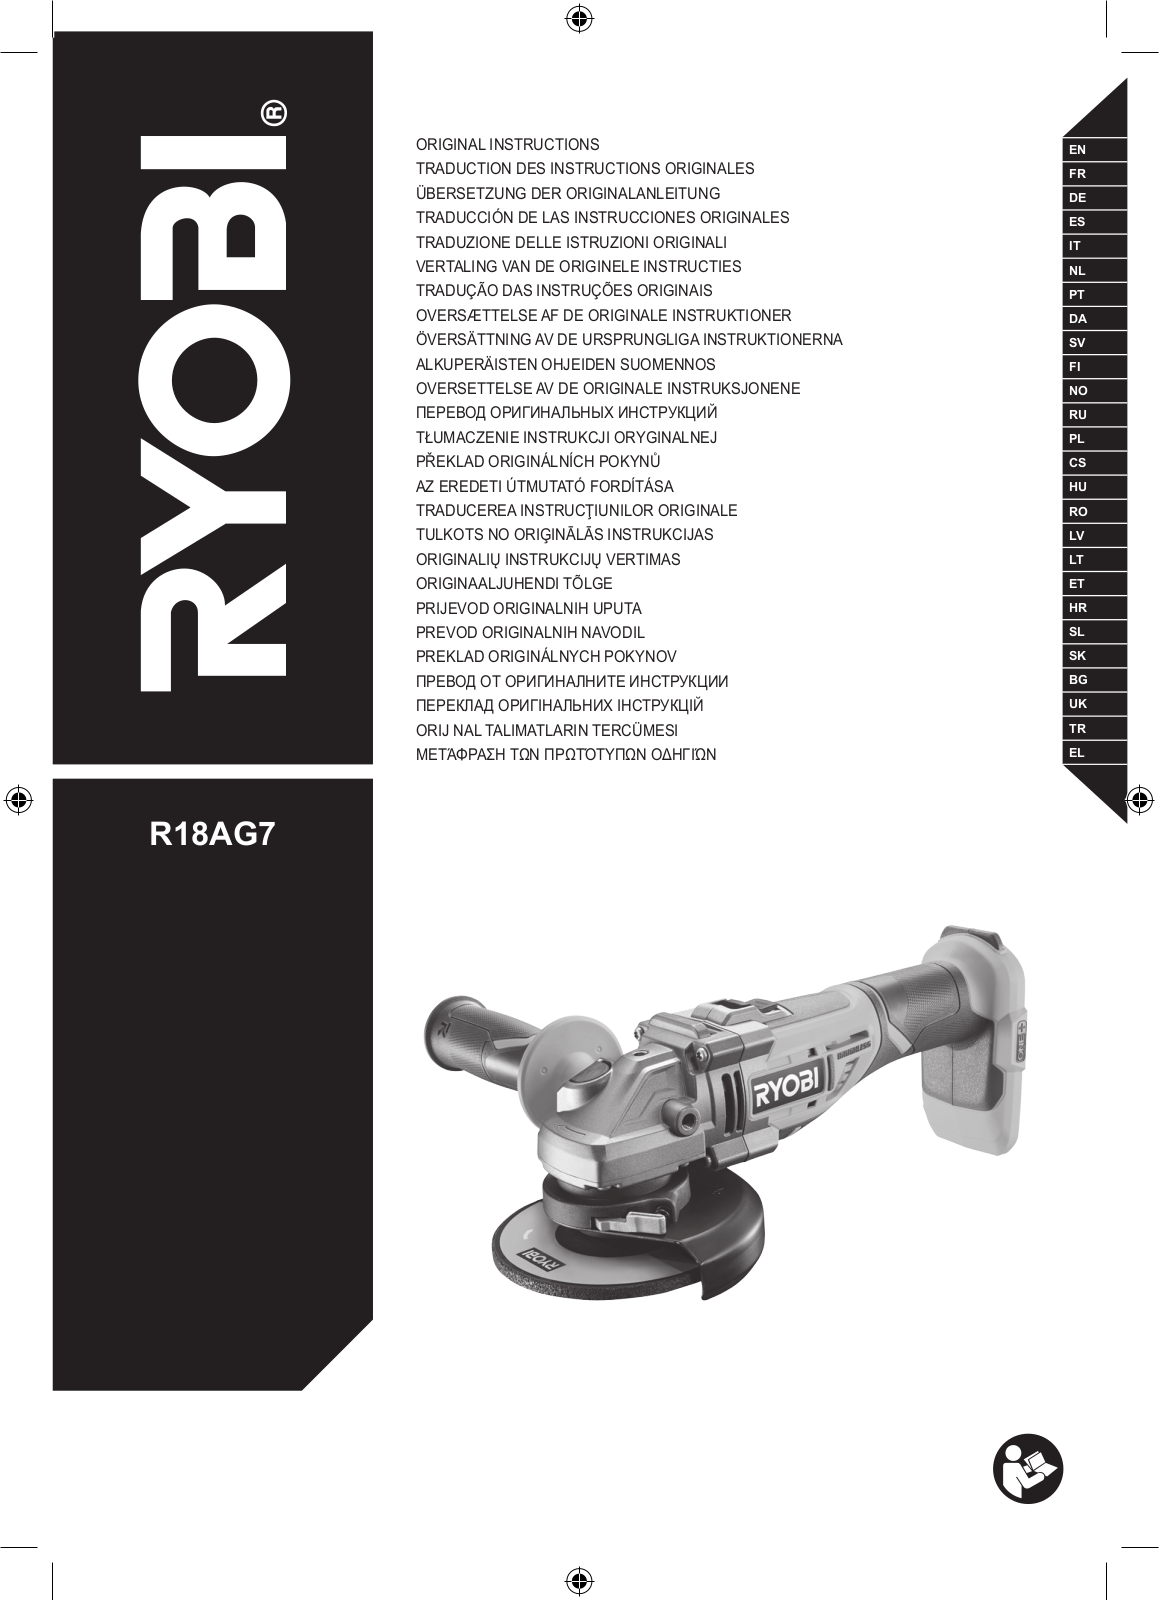 Ryobi R18AG7 User Manual